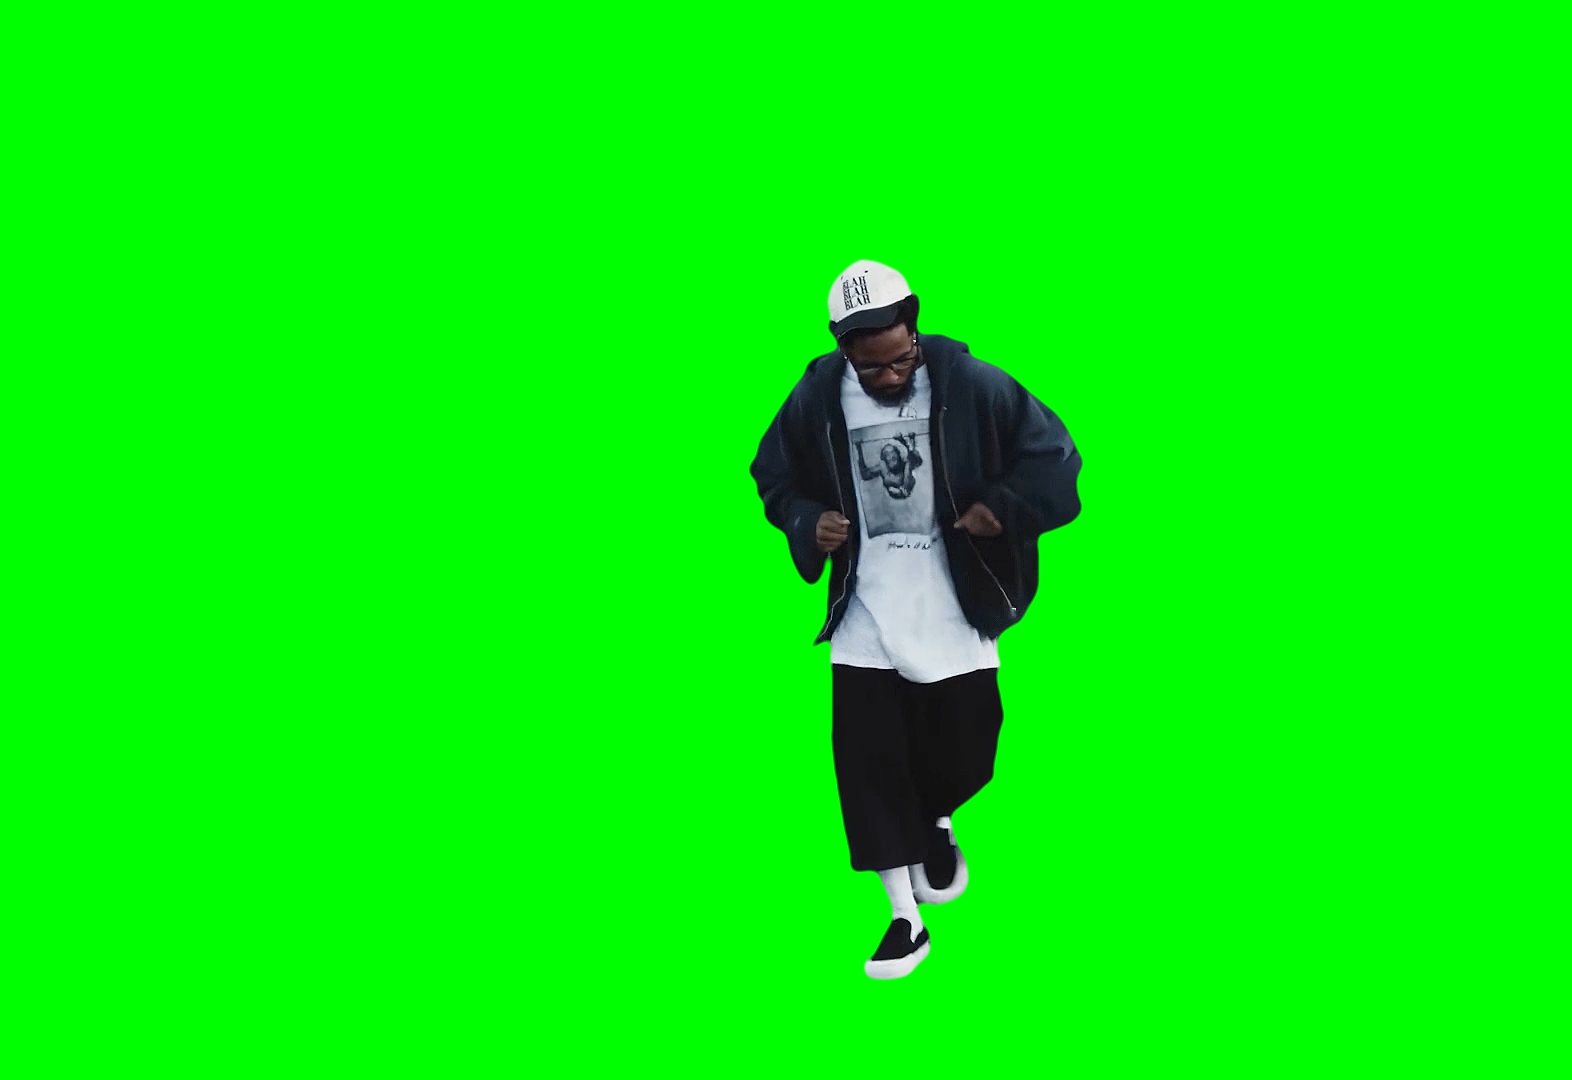 Kendrick Lamar Hopscotch Crip Walk meme - Not Like Us music video (Green Screen)